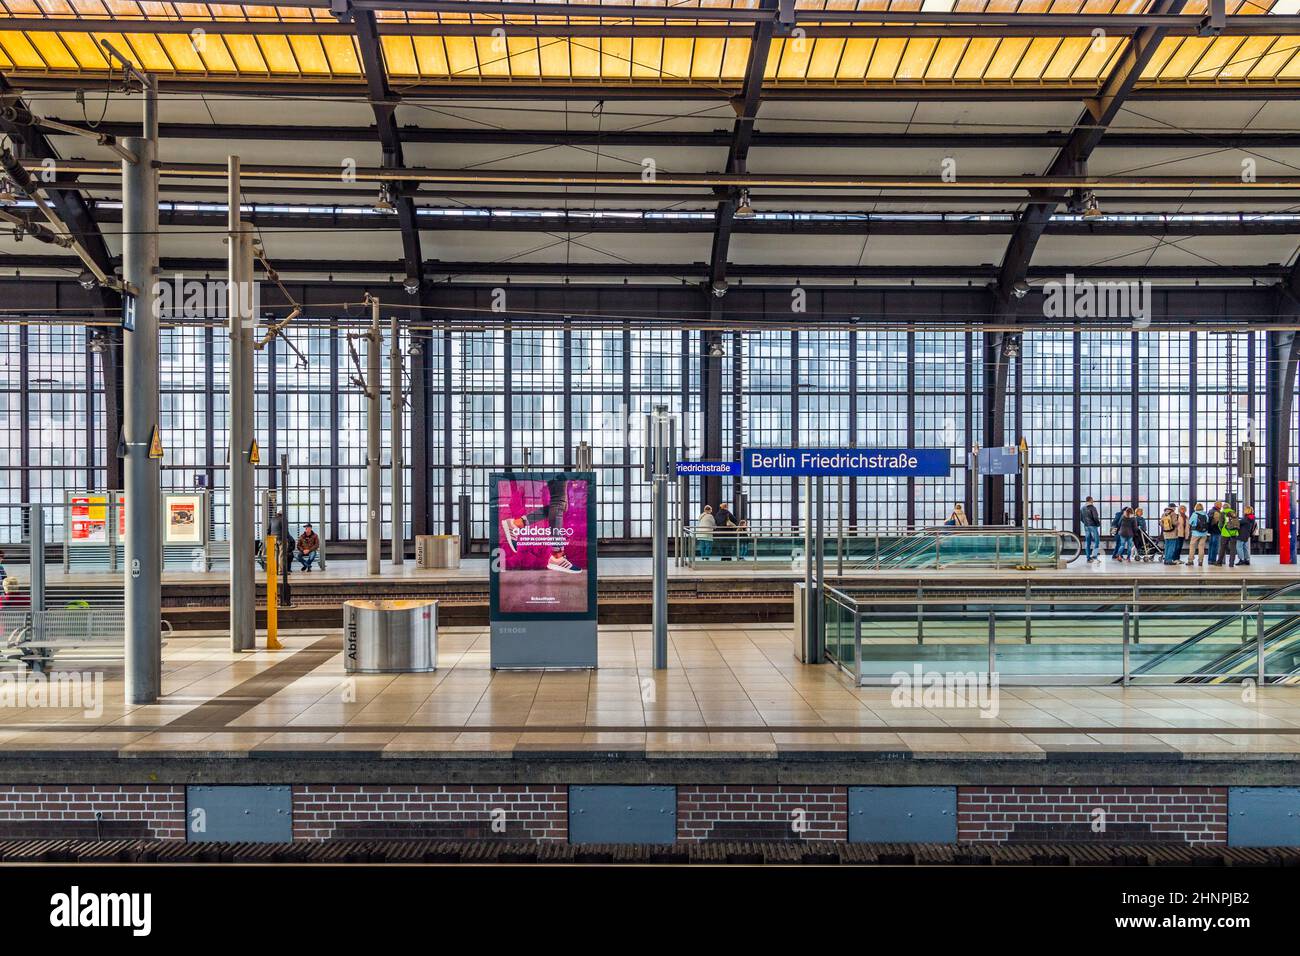 Treinta Desempleados itálico Estación de tren s bahn berlín fotografías e imágenes de alta resolución -  Página 3 - Alamy